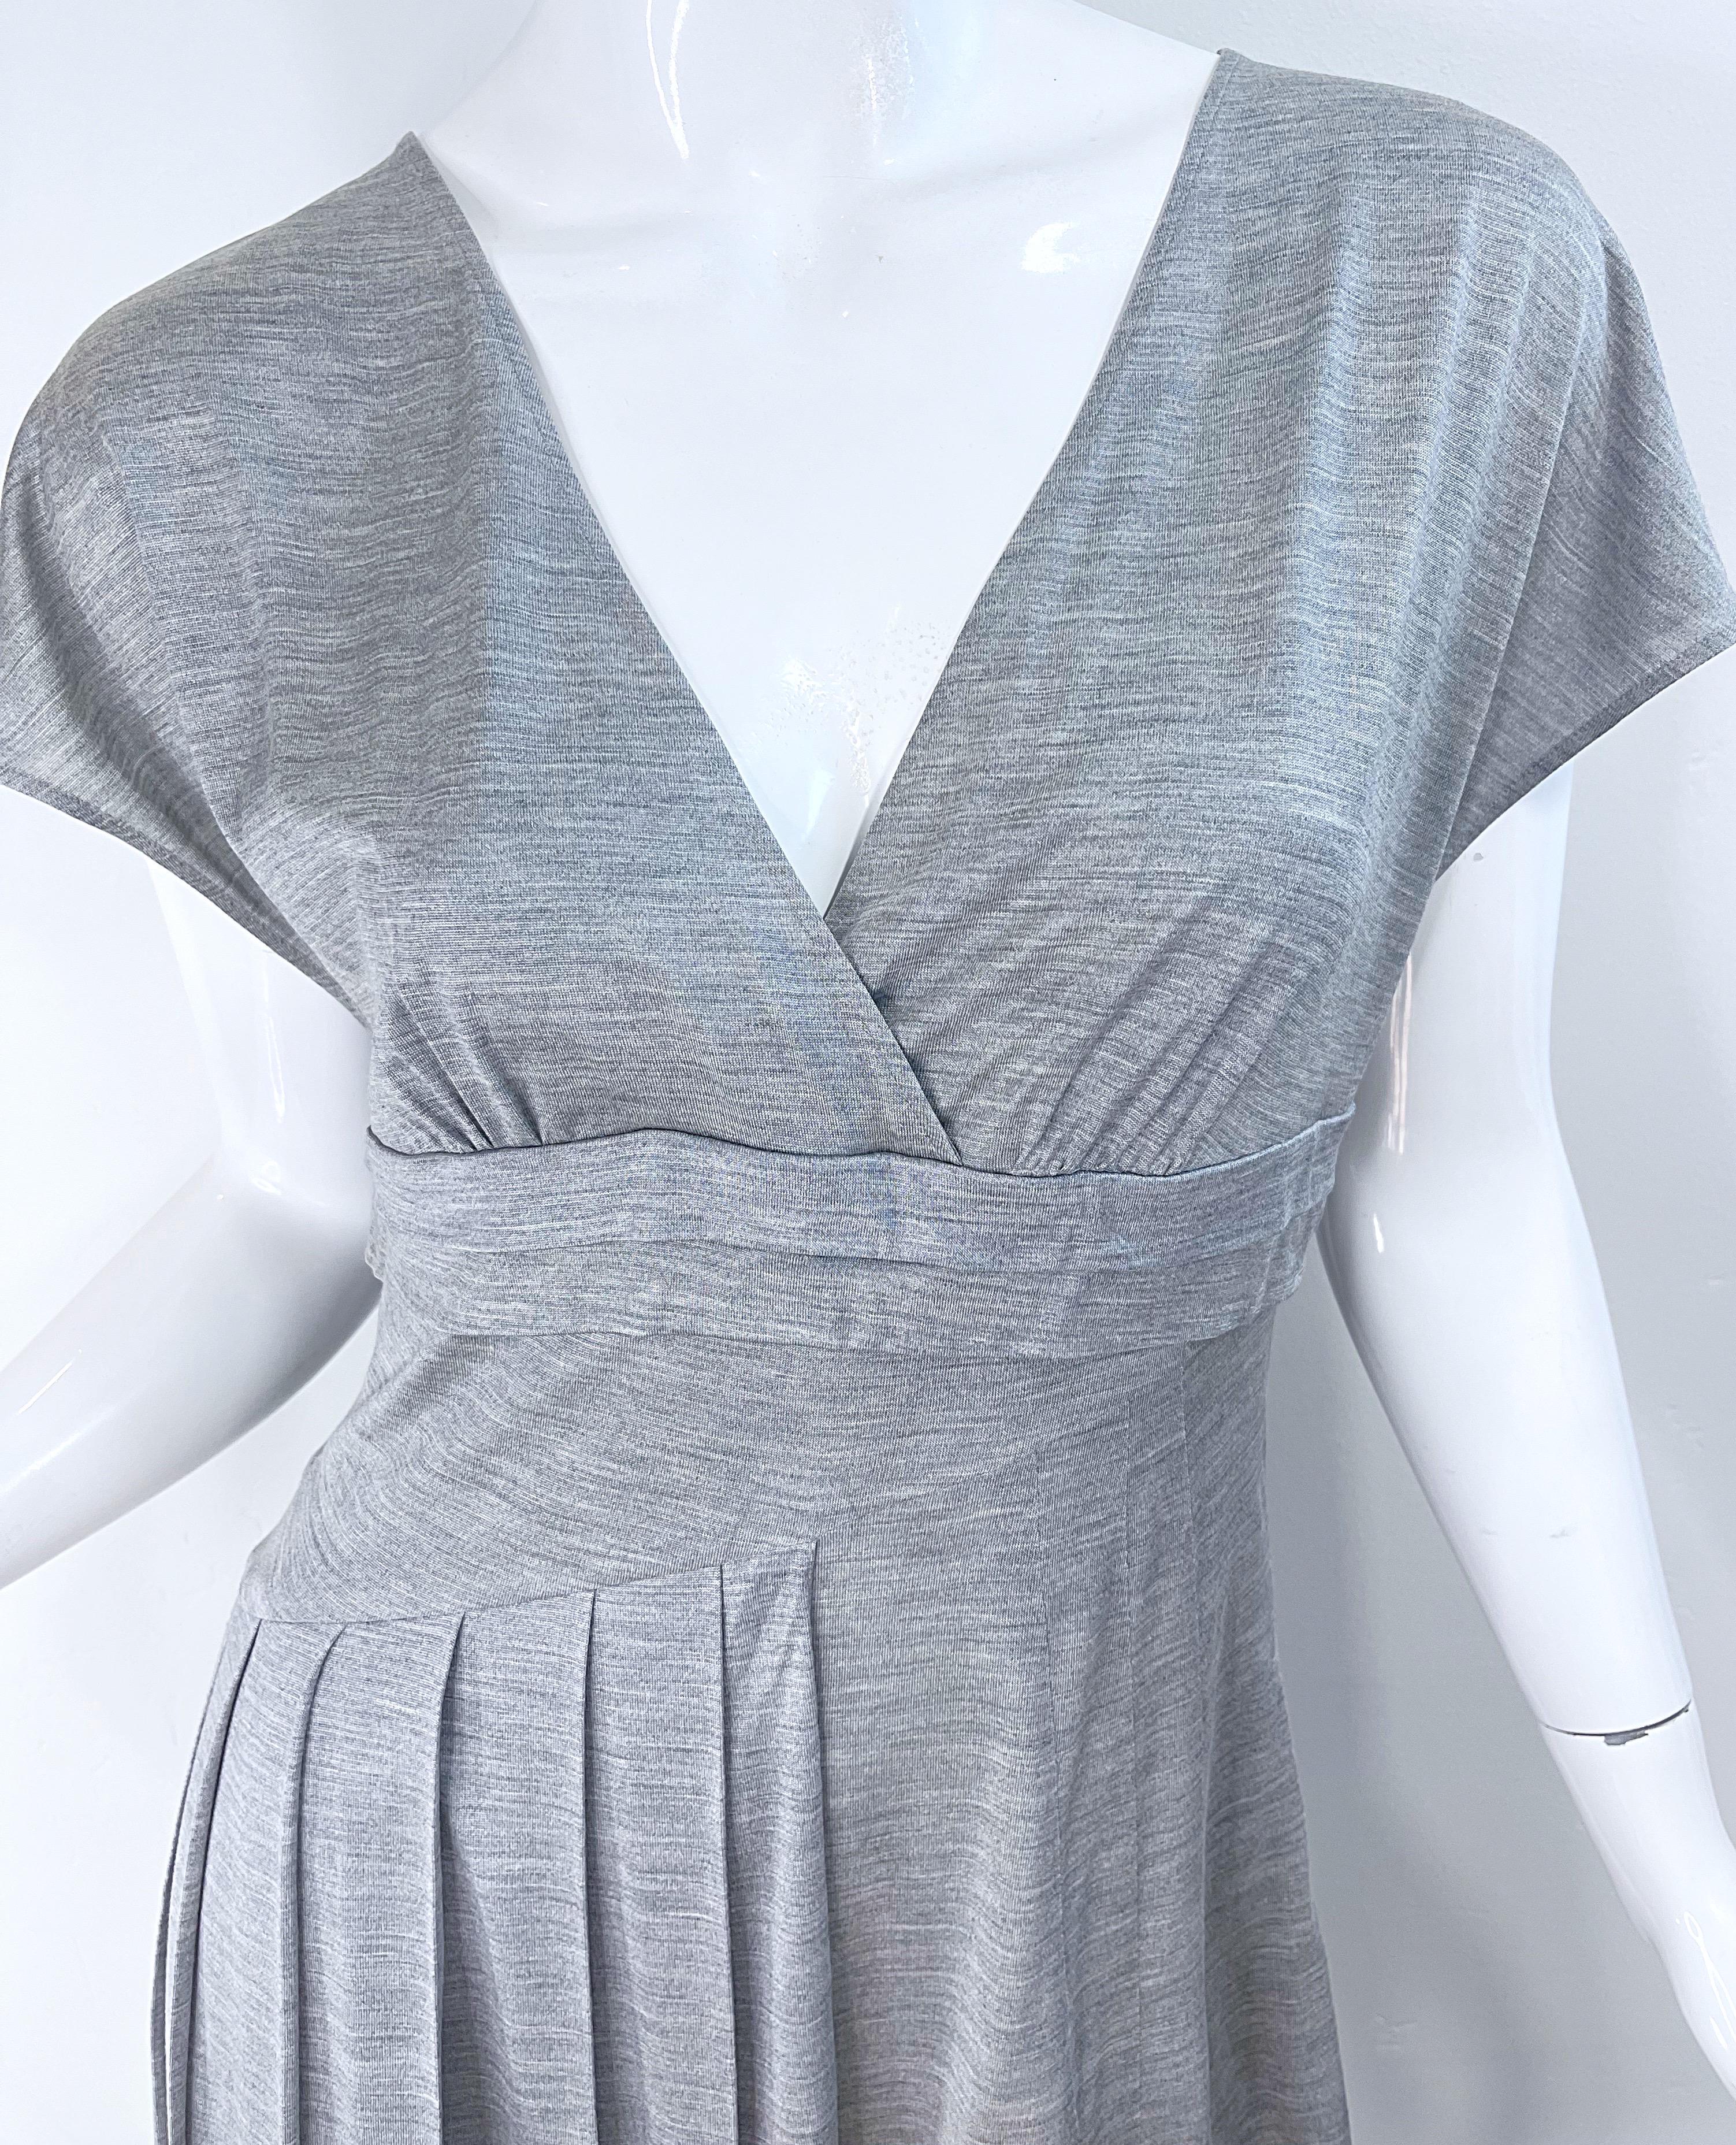 Women's Christian Dior by John Galliano Spring 2007 Size 8 Grey Silk Short Sleeve Dress For Sale